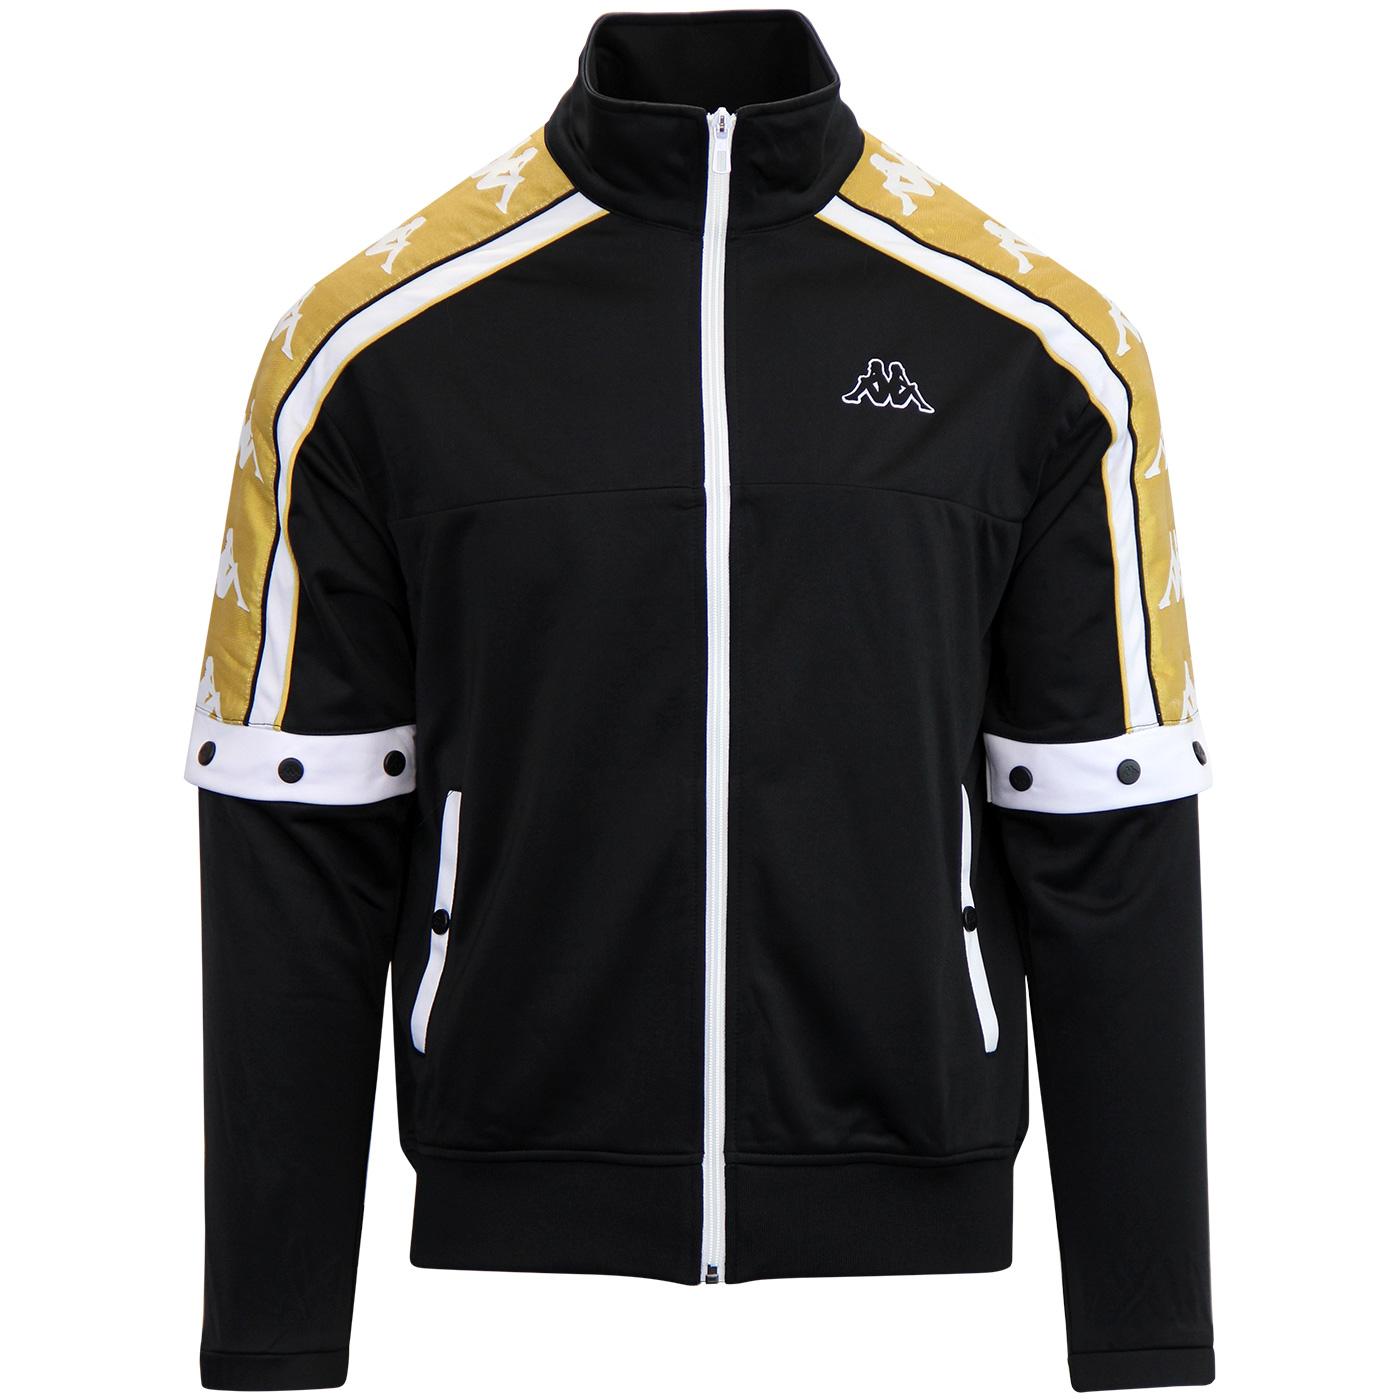 black and gold kappa track jacket